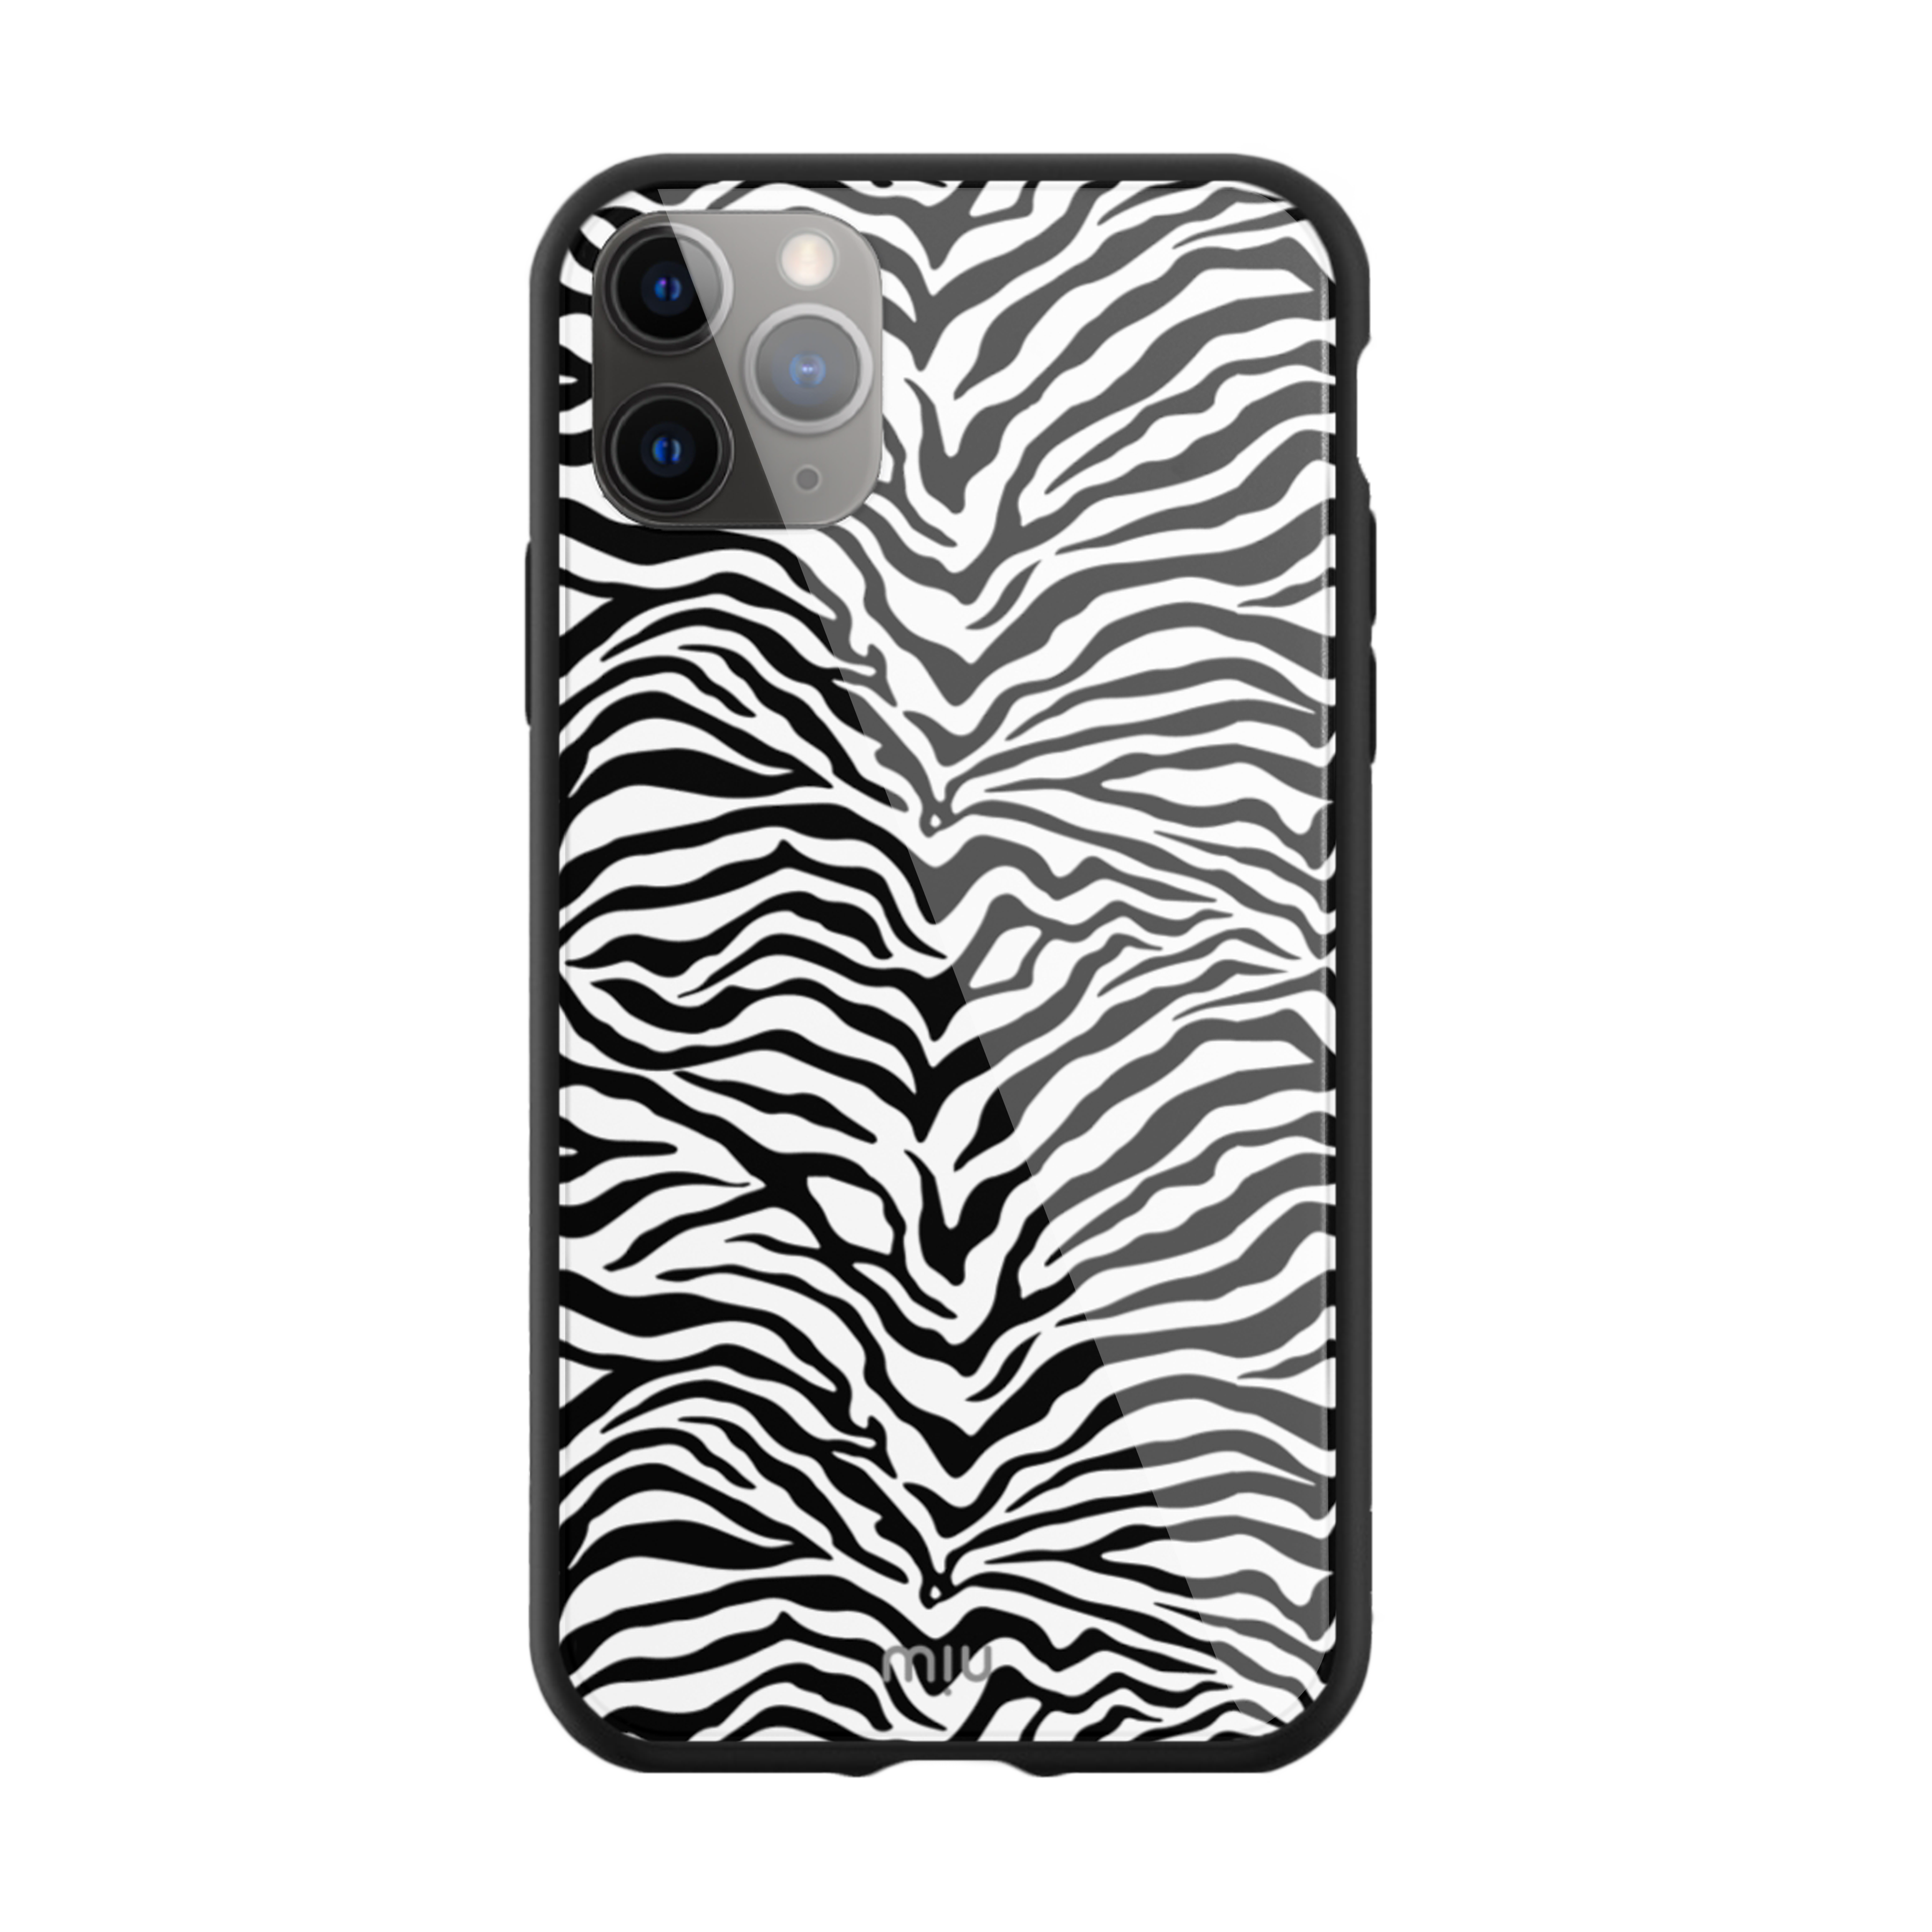 Prints of a Zebra